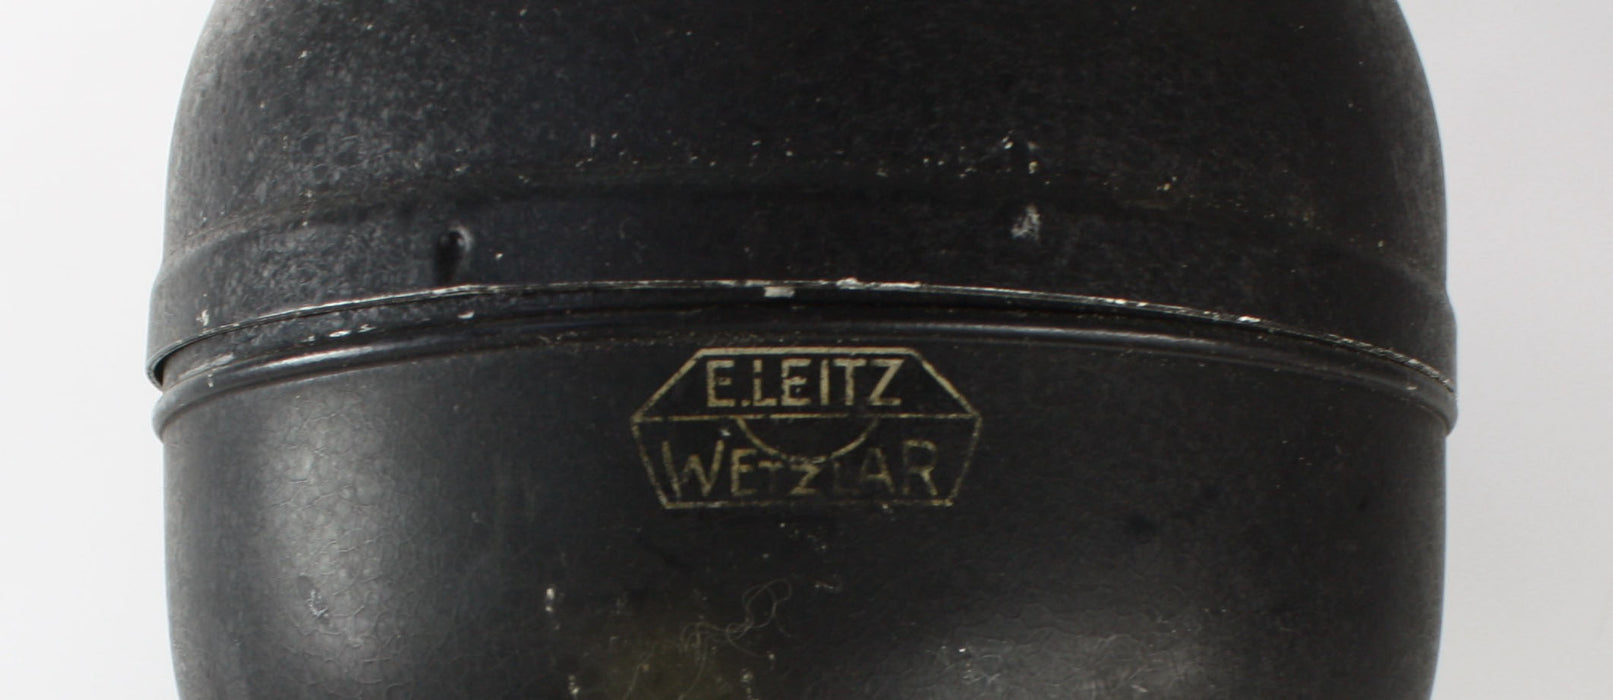 Vintage E Leitz Wetzlar photography enlarger for darkroom with Smiths Johnson timer